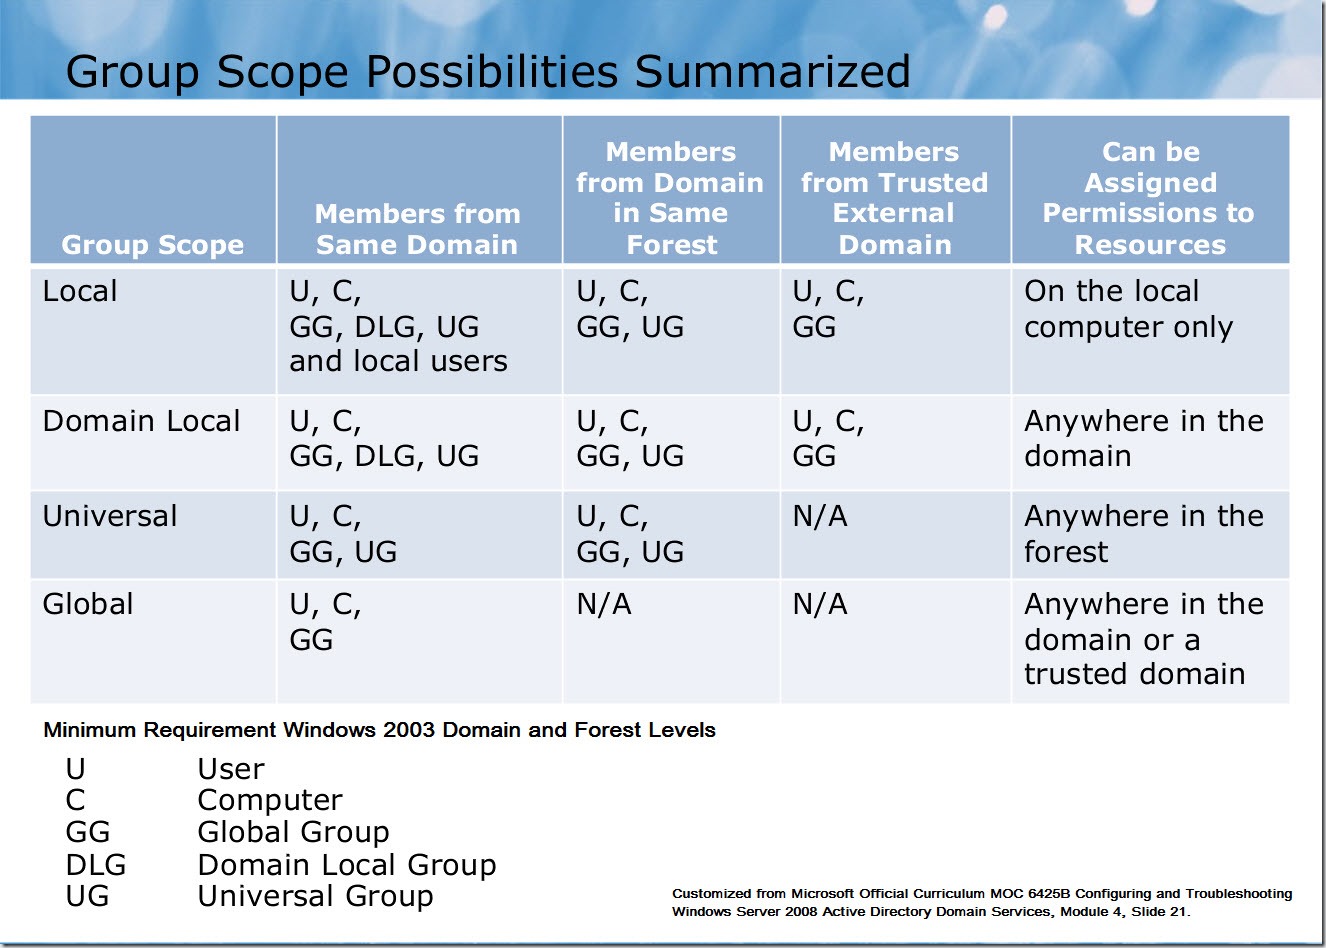 AD Group Strategy 6425B Mod 4, Slide 21, Group Scopes Summarized